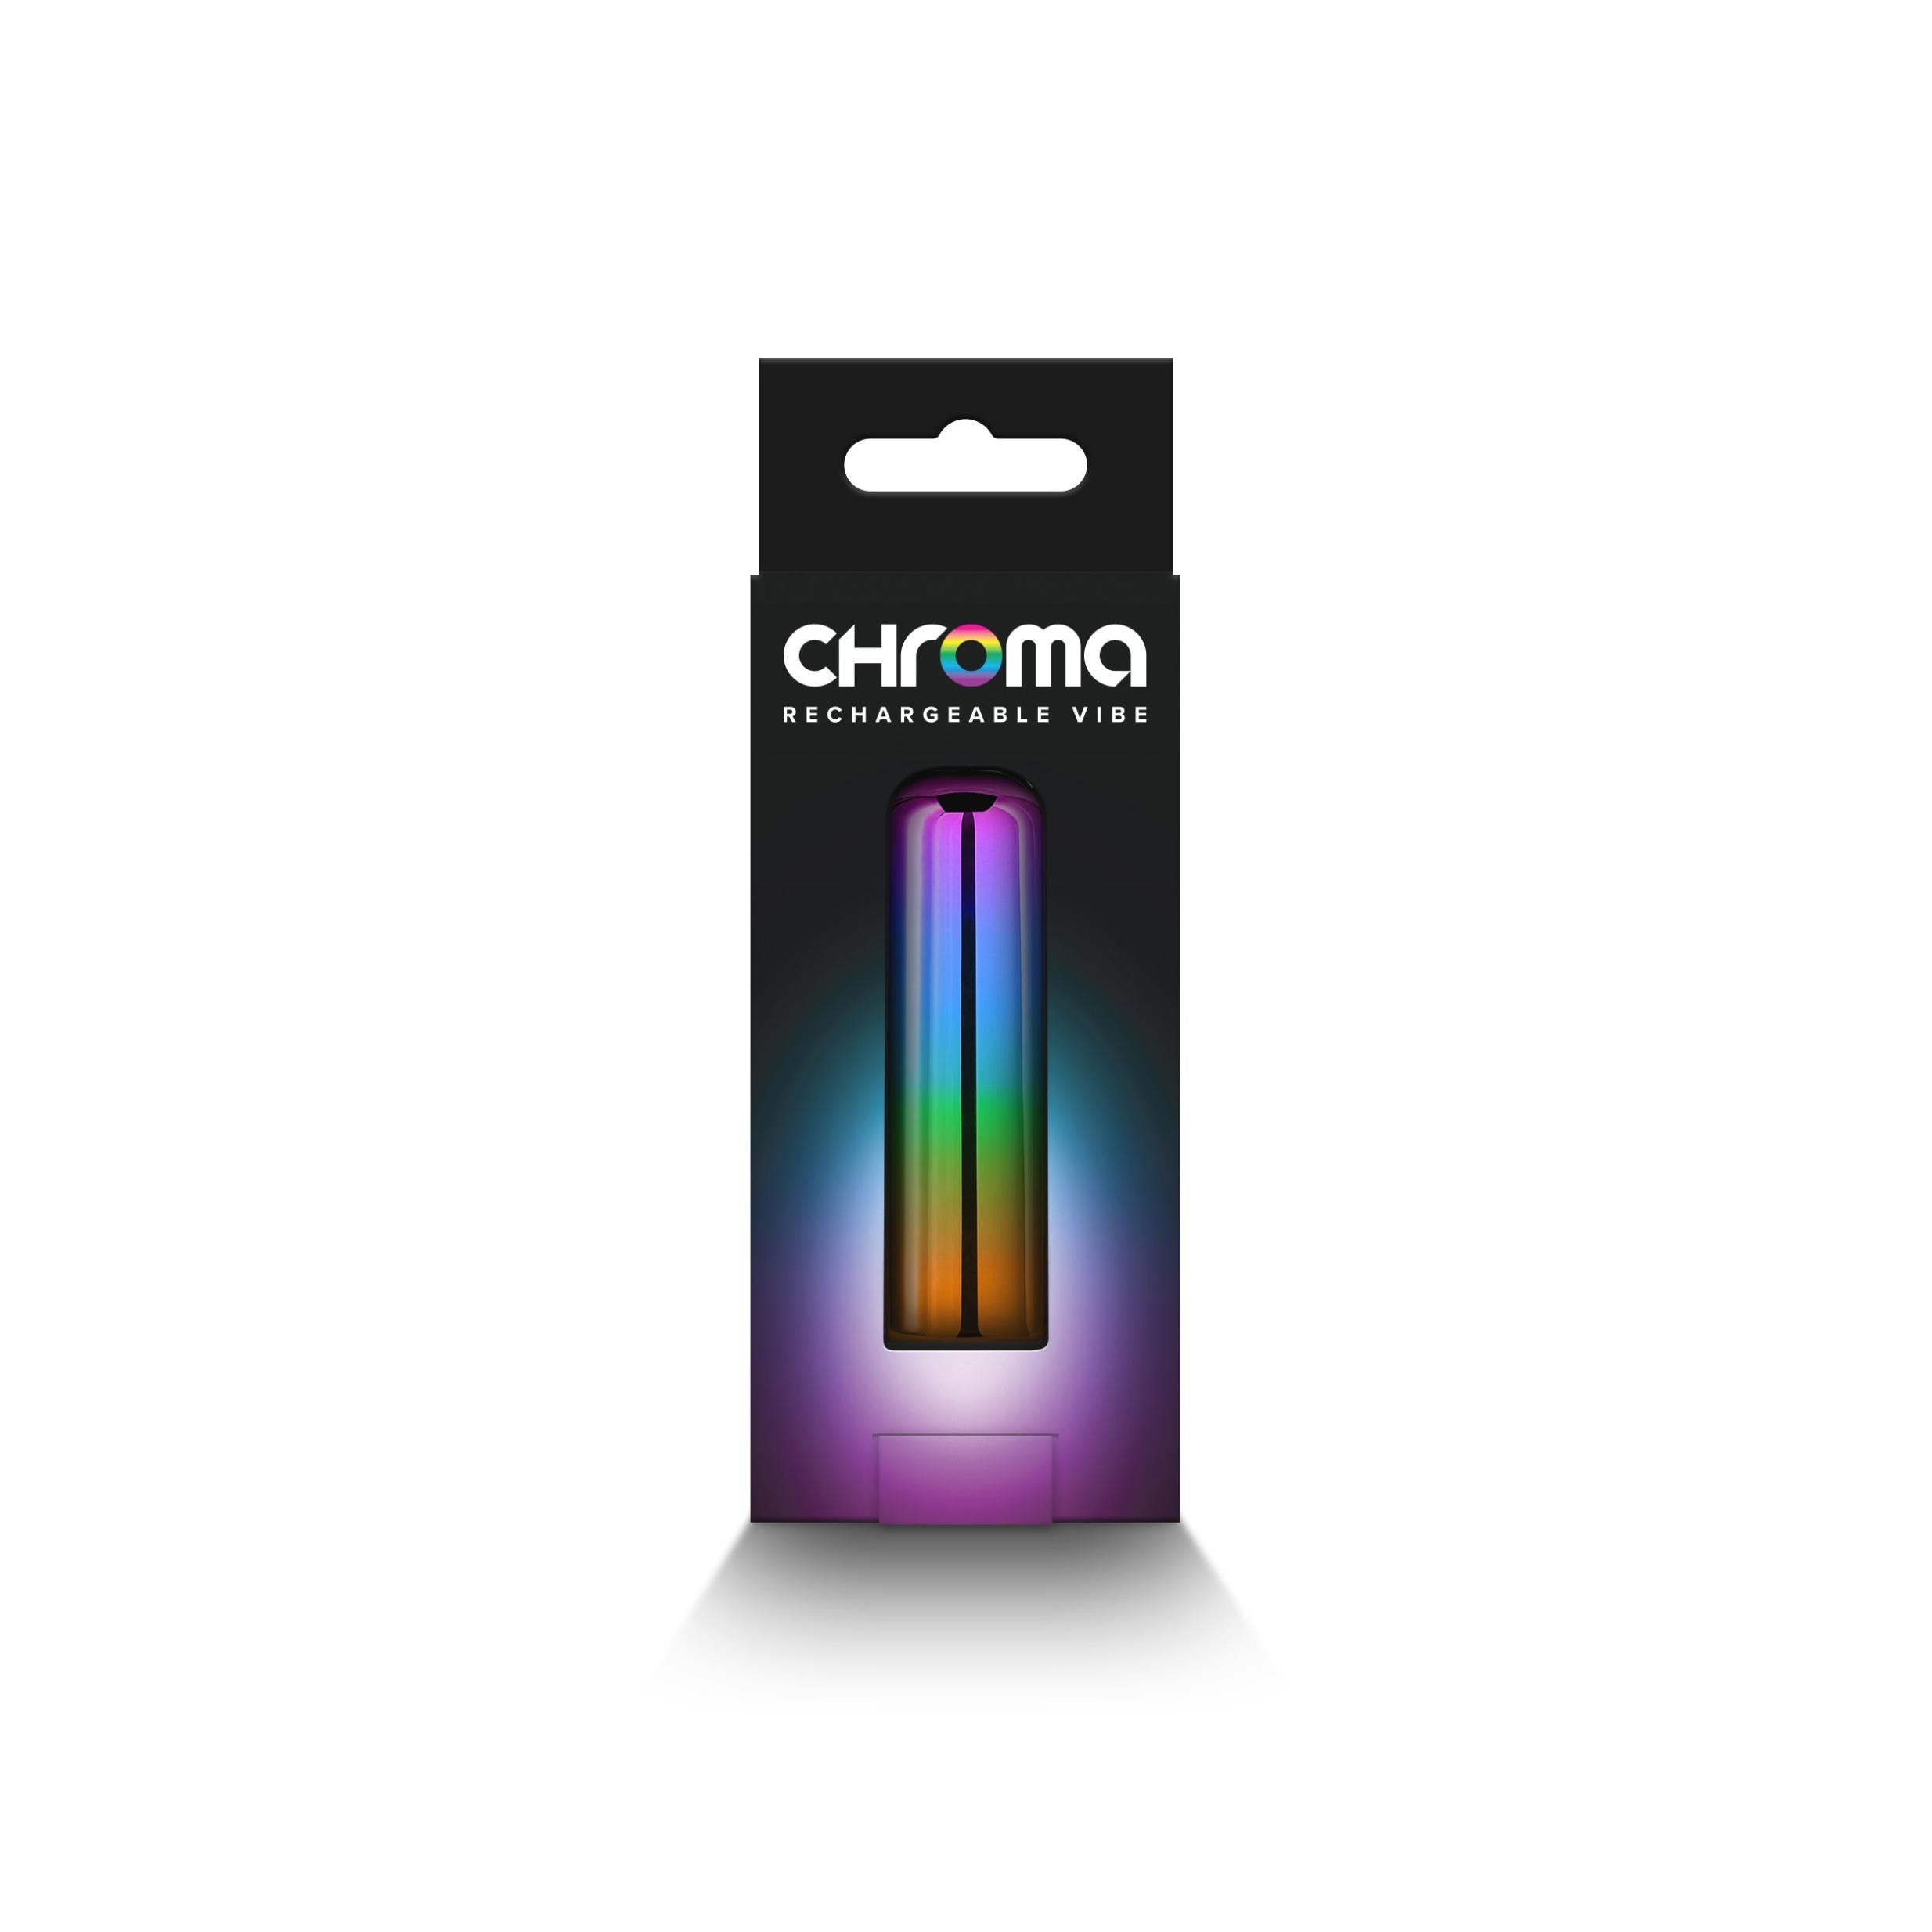 Chroma Rainbow: Slim Vibrator by NS Novelties